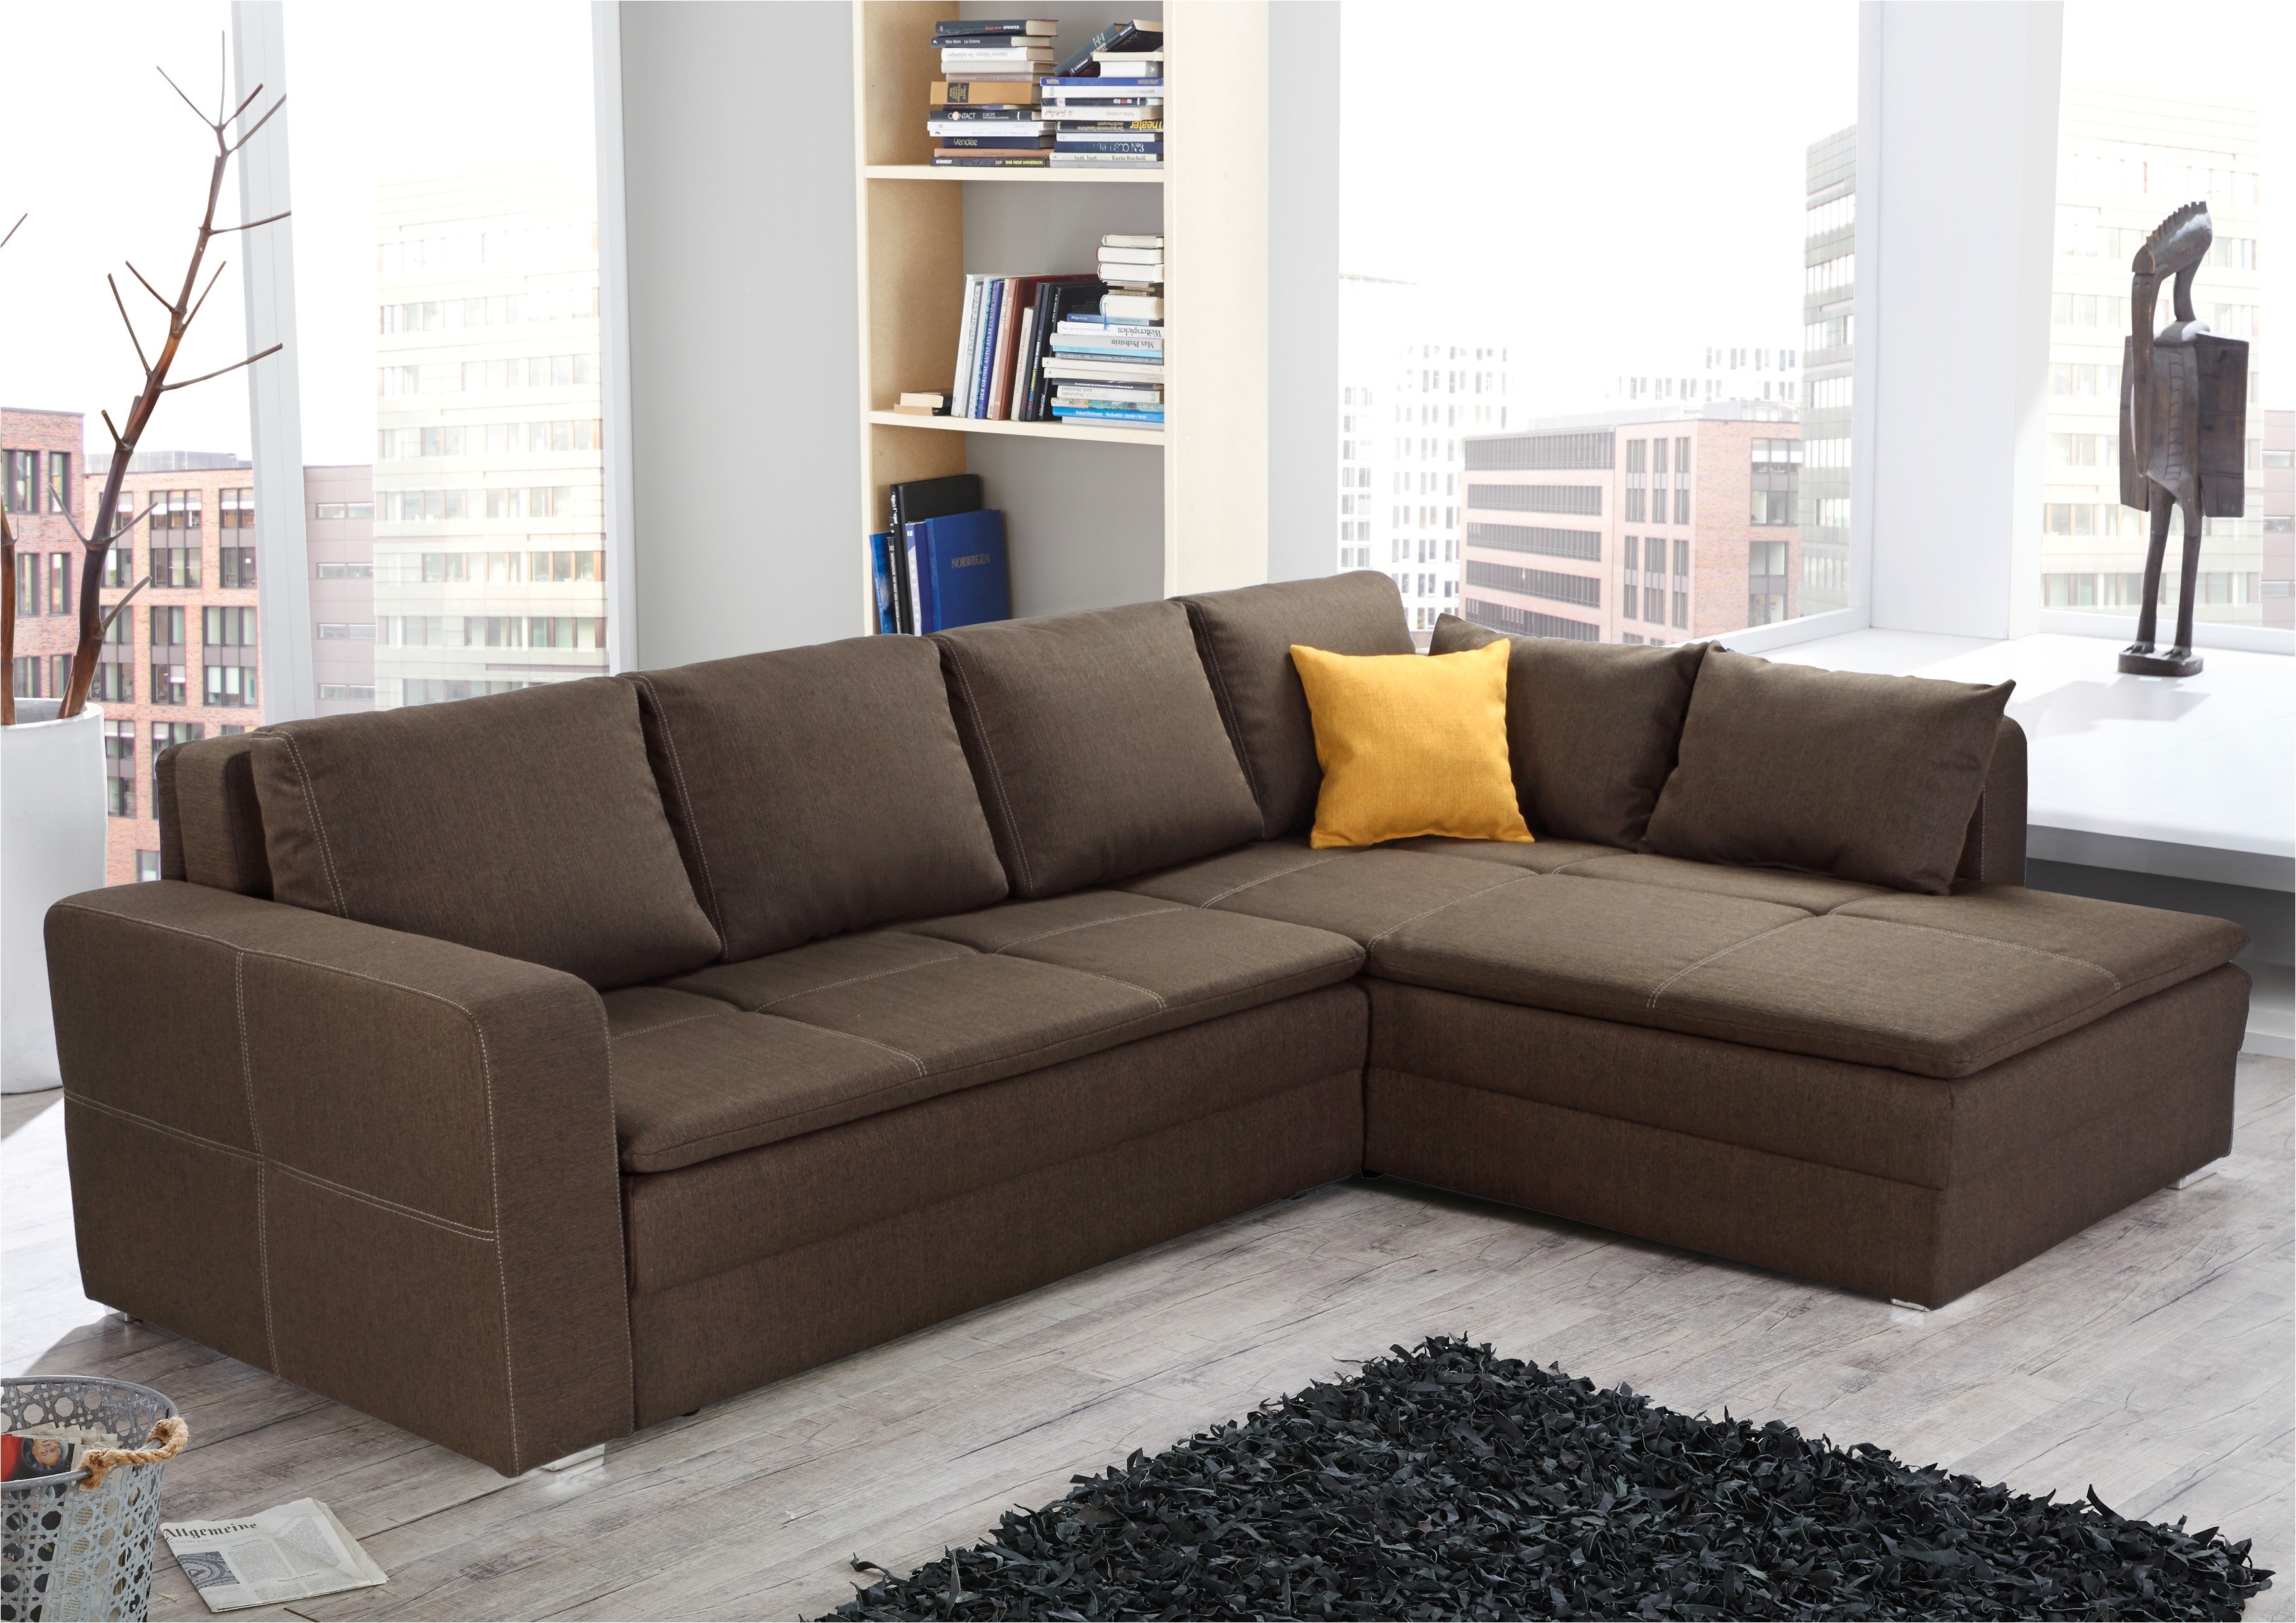 charming macys furniture store 1 sofa bed sleeper with memory foam mattress full size 3877 x